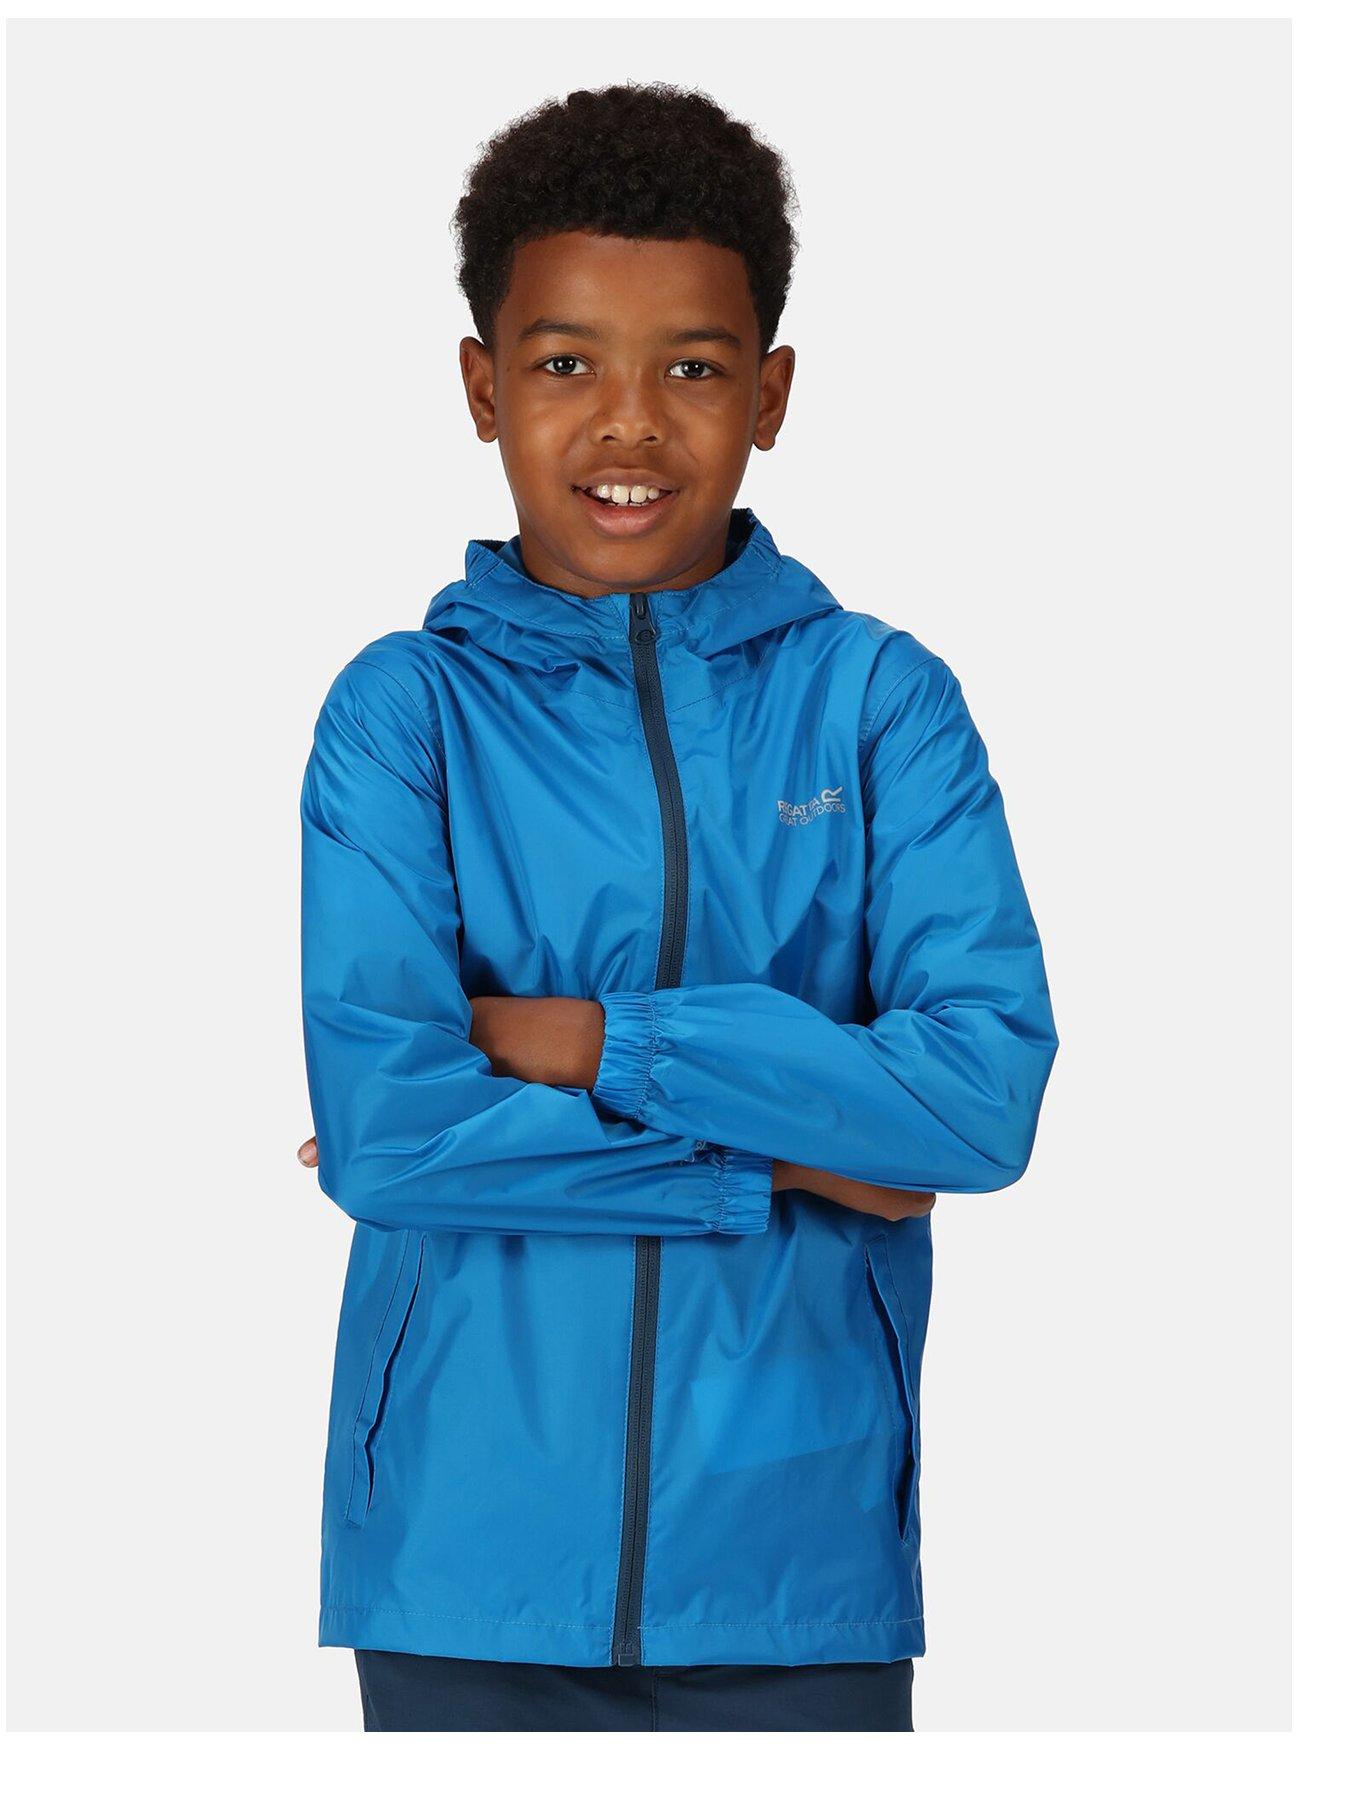 Waterproof Kids Raincoat, Wild Island Apparel, boys/girls, blue (2-9Y) –  Wild Island Co